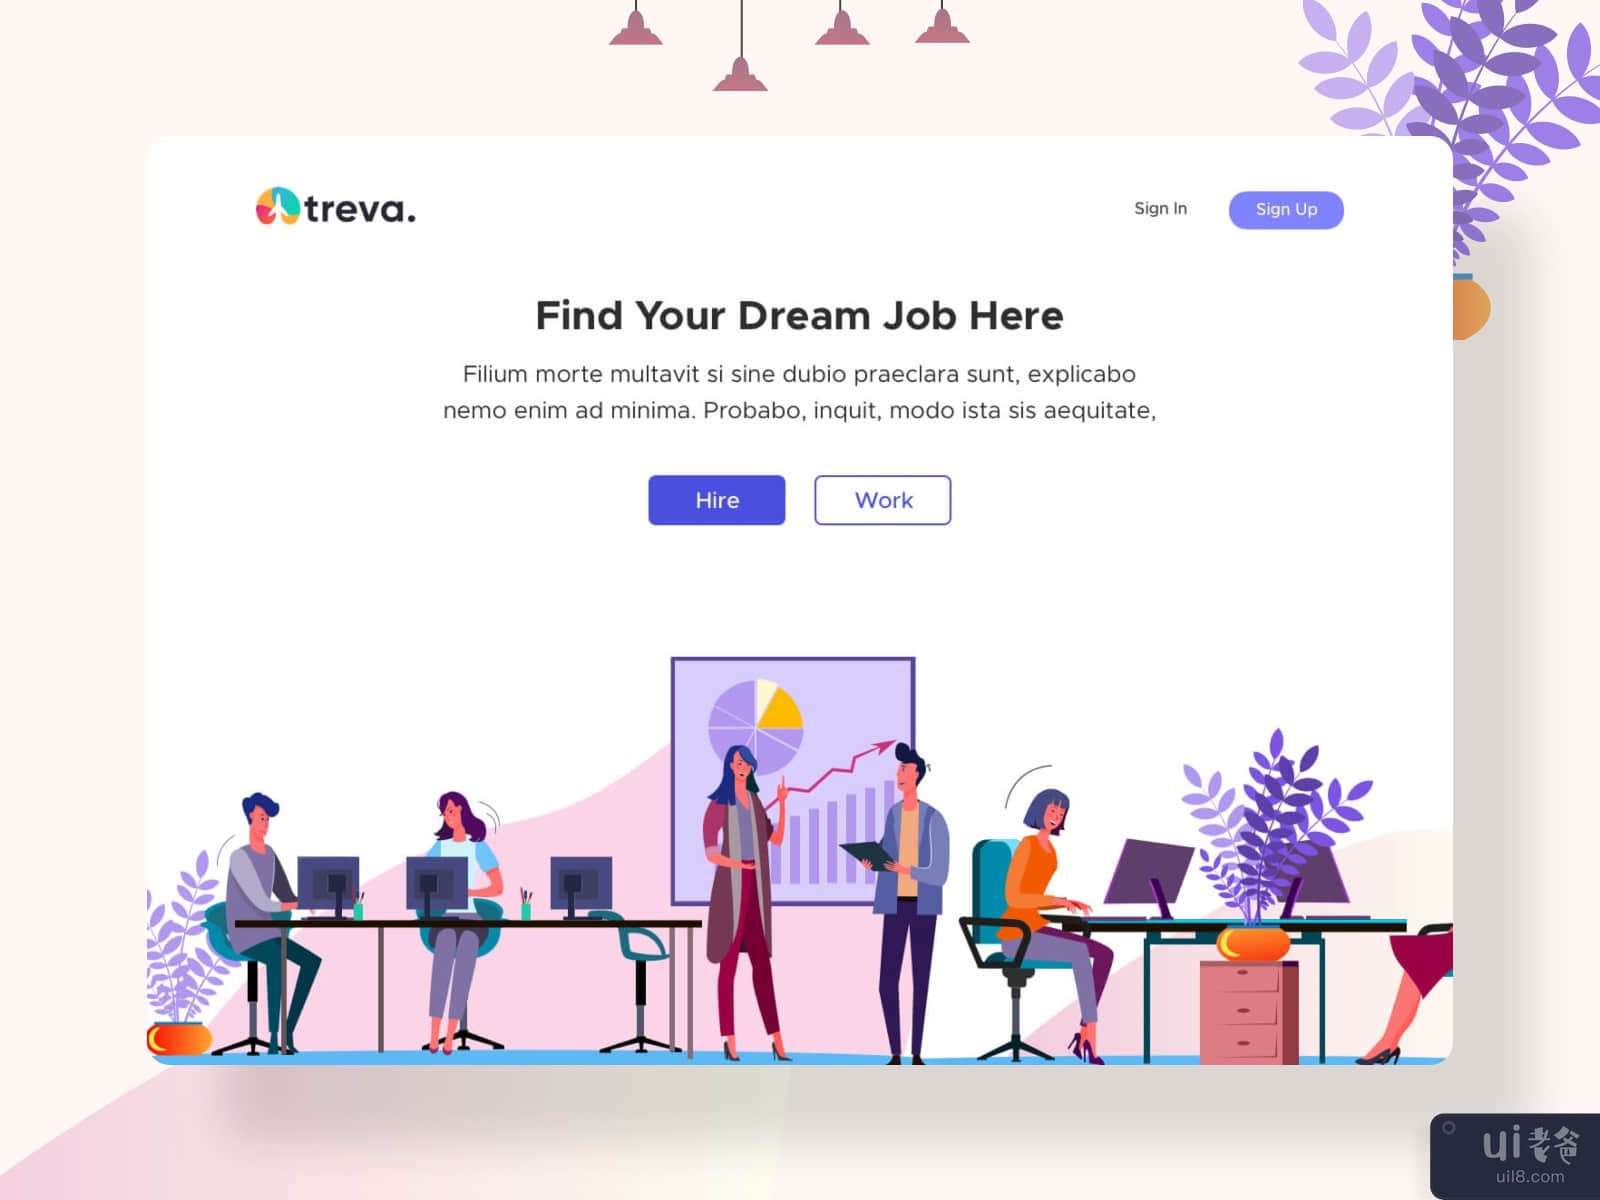 Treva - Job Hiring Platform Exploration